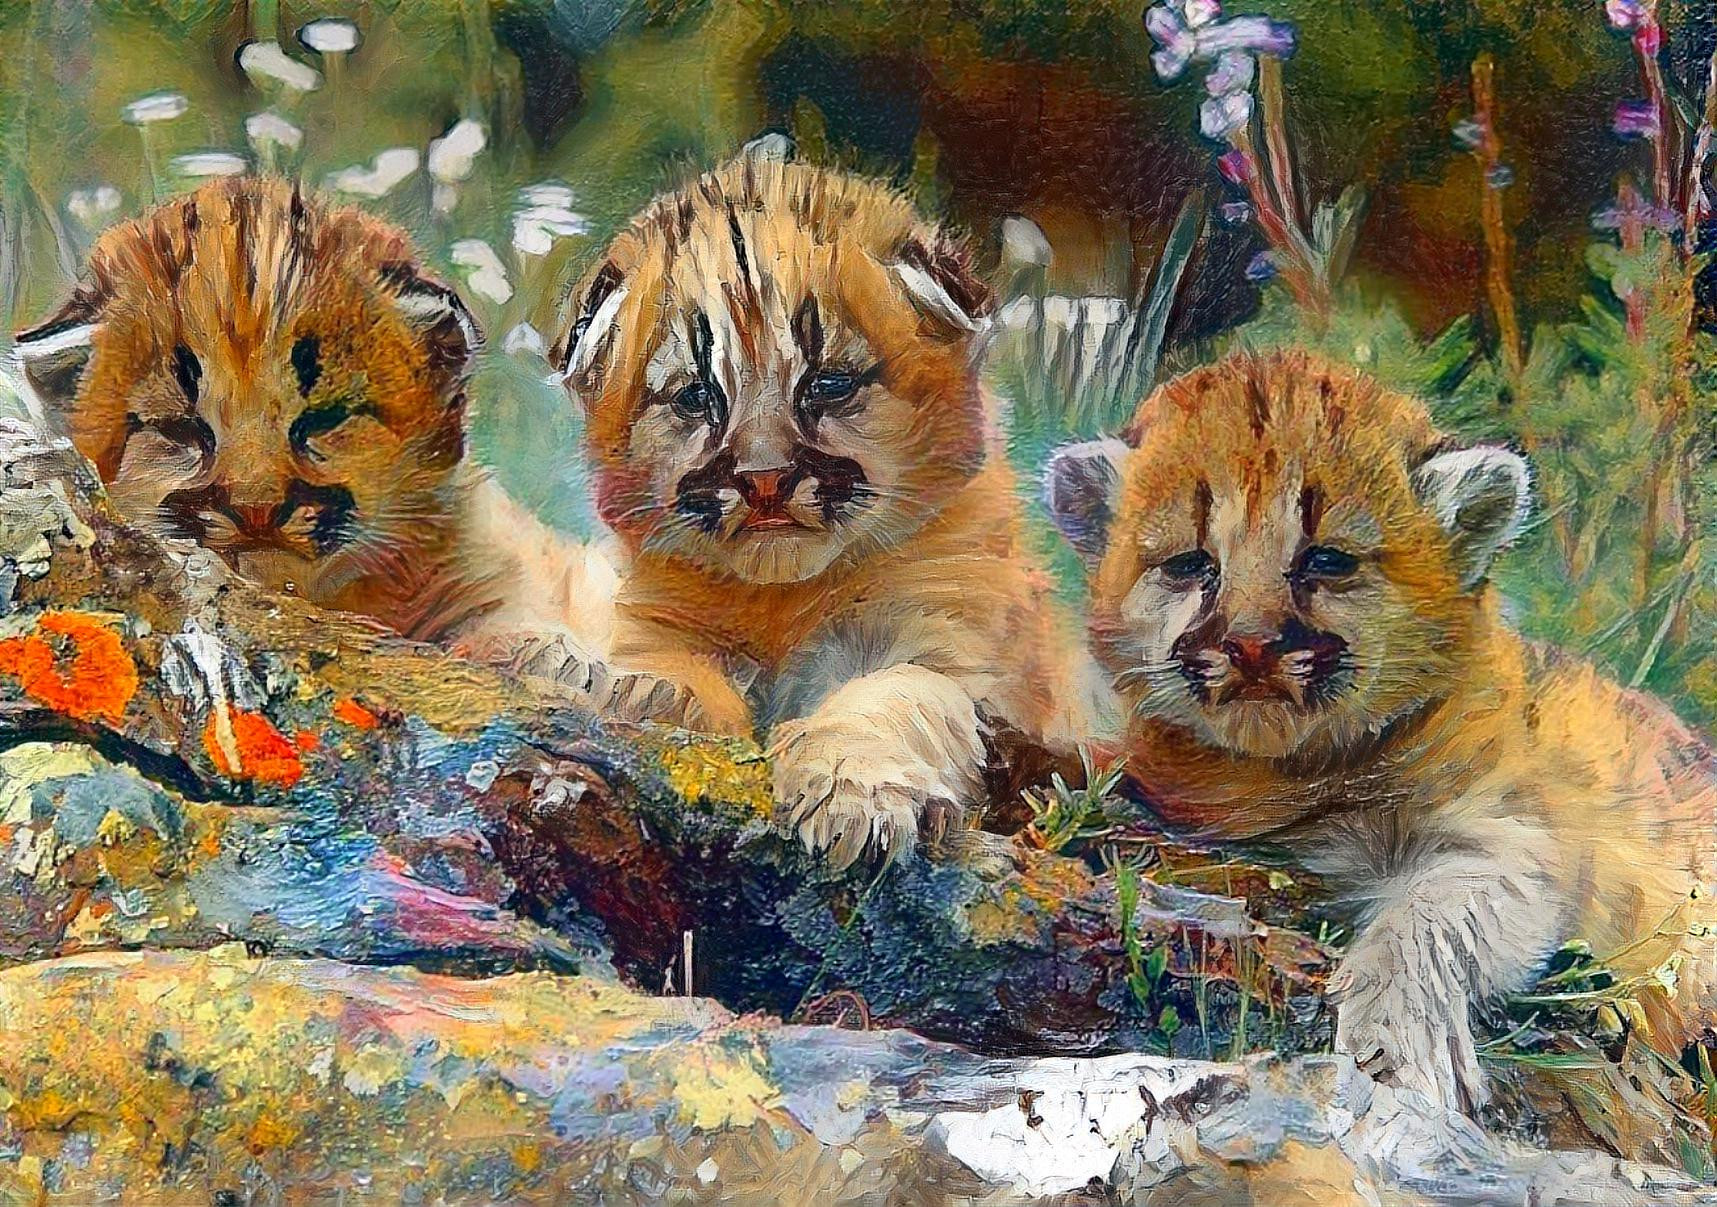 Mountain Lion Cubs